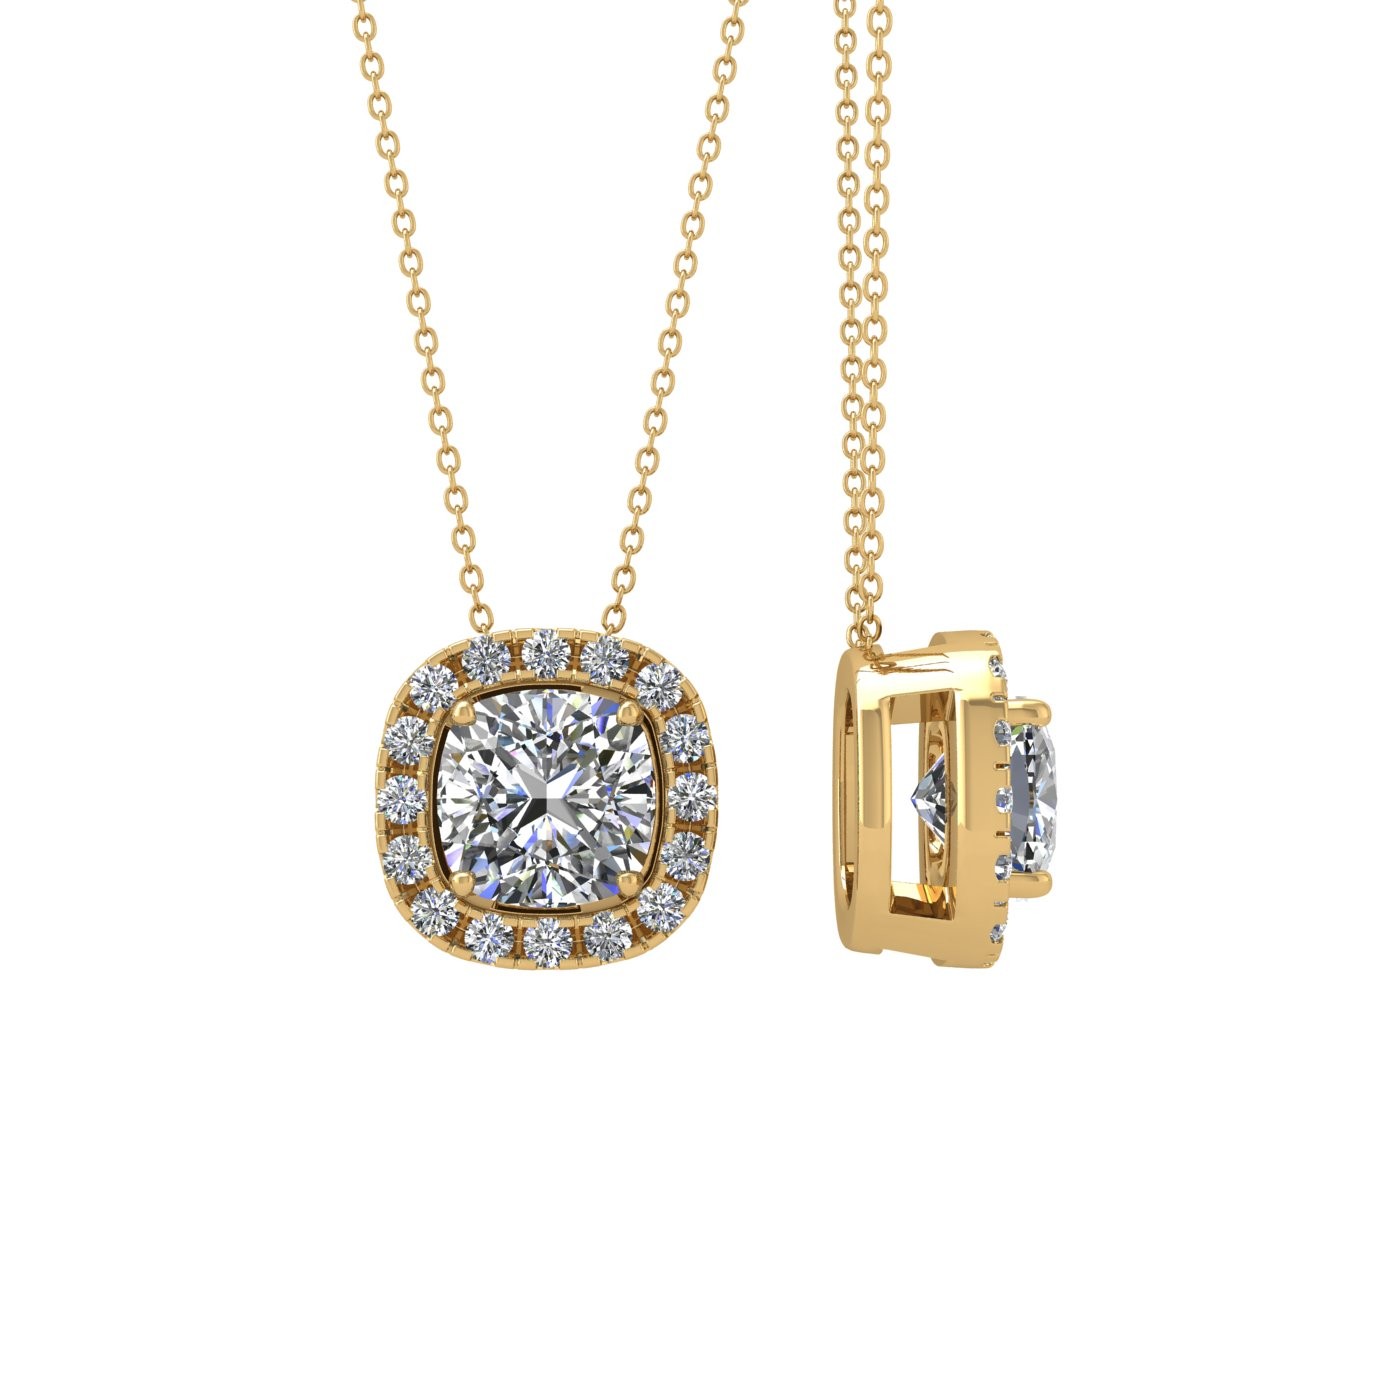 18k yellow gold 2 ct 4 prongs cushion shape diamond pendant with diamond pavÉ set halo Photos & images